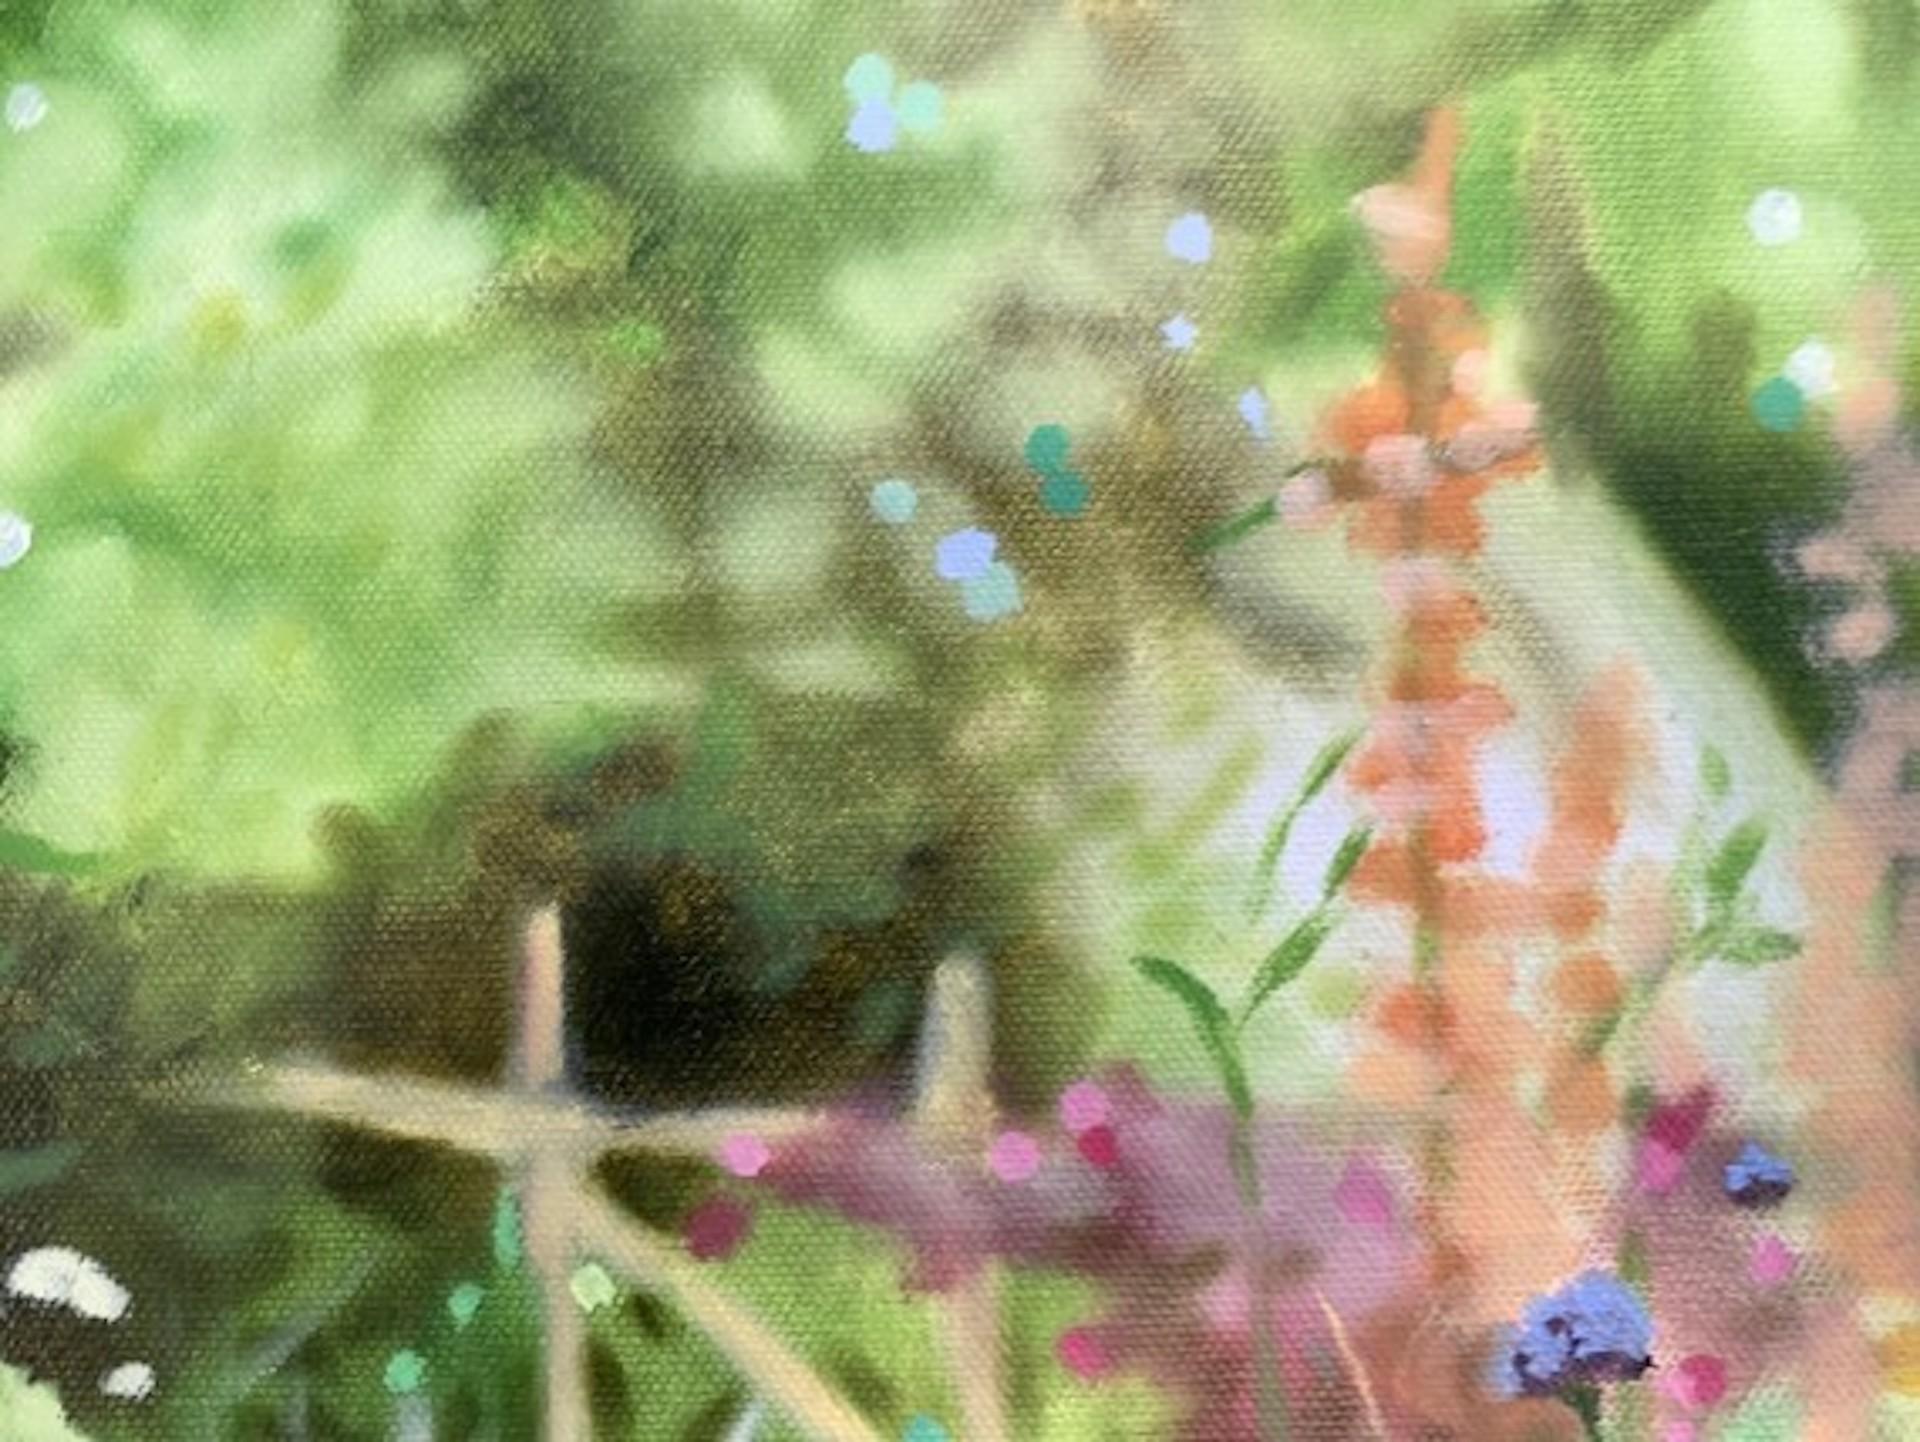 Hampshire Summer Garden by Dylan Lloyd [2021]
original

Oil paint on canvas

Image size: H:50 cm x W:40 cm

Complete Size of Unframed Work: H:50 cm x W:40 cm x D:2.5cm

Framed Size: H:55 cm x W:45 cm x D:3.5cm

Sold Framed

Please note that insitu